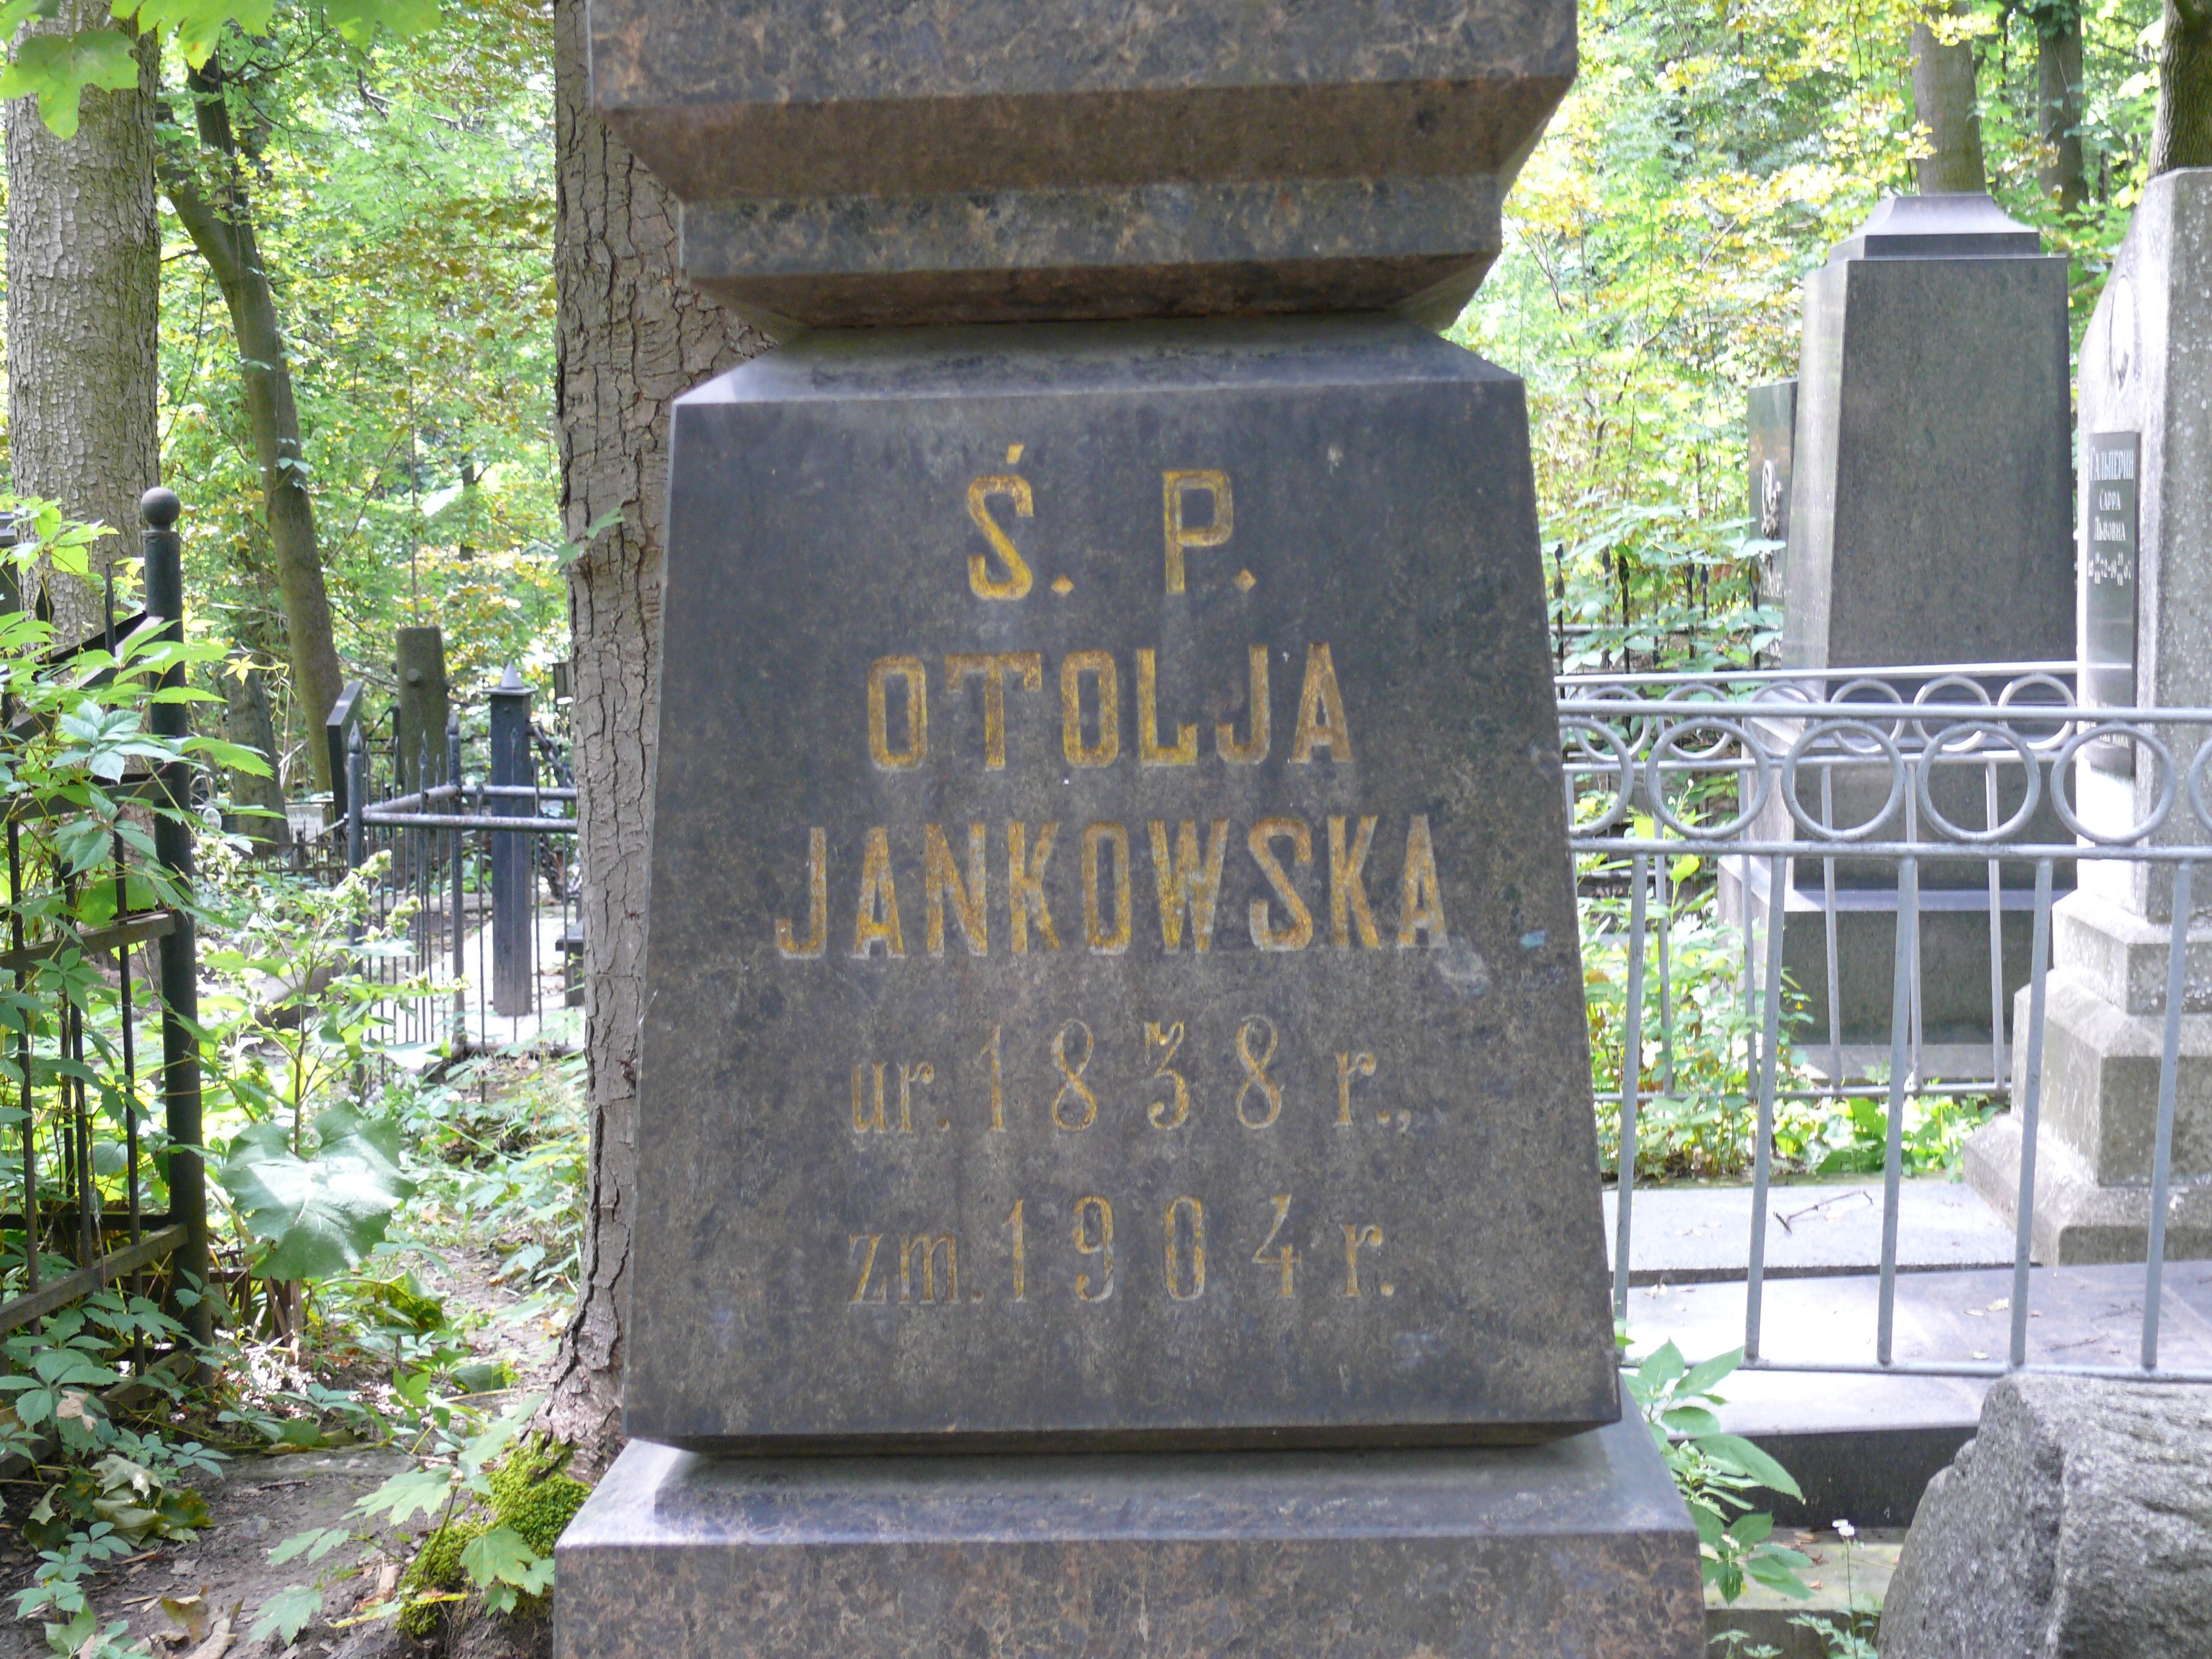 Inscription from the gravestone of Otyla Jankowska